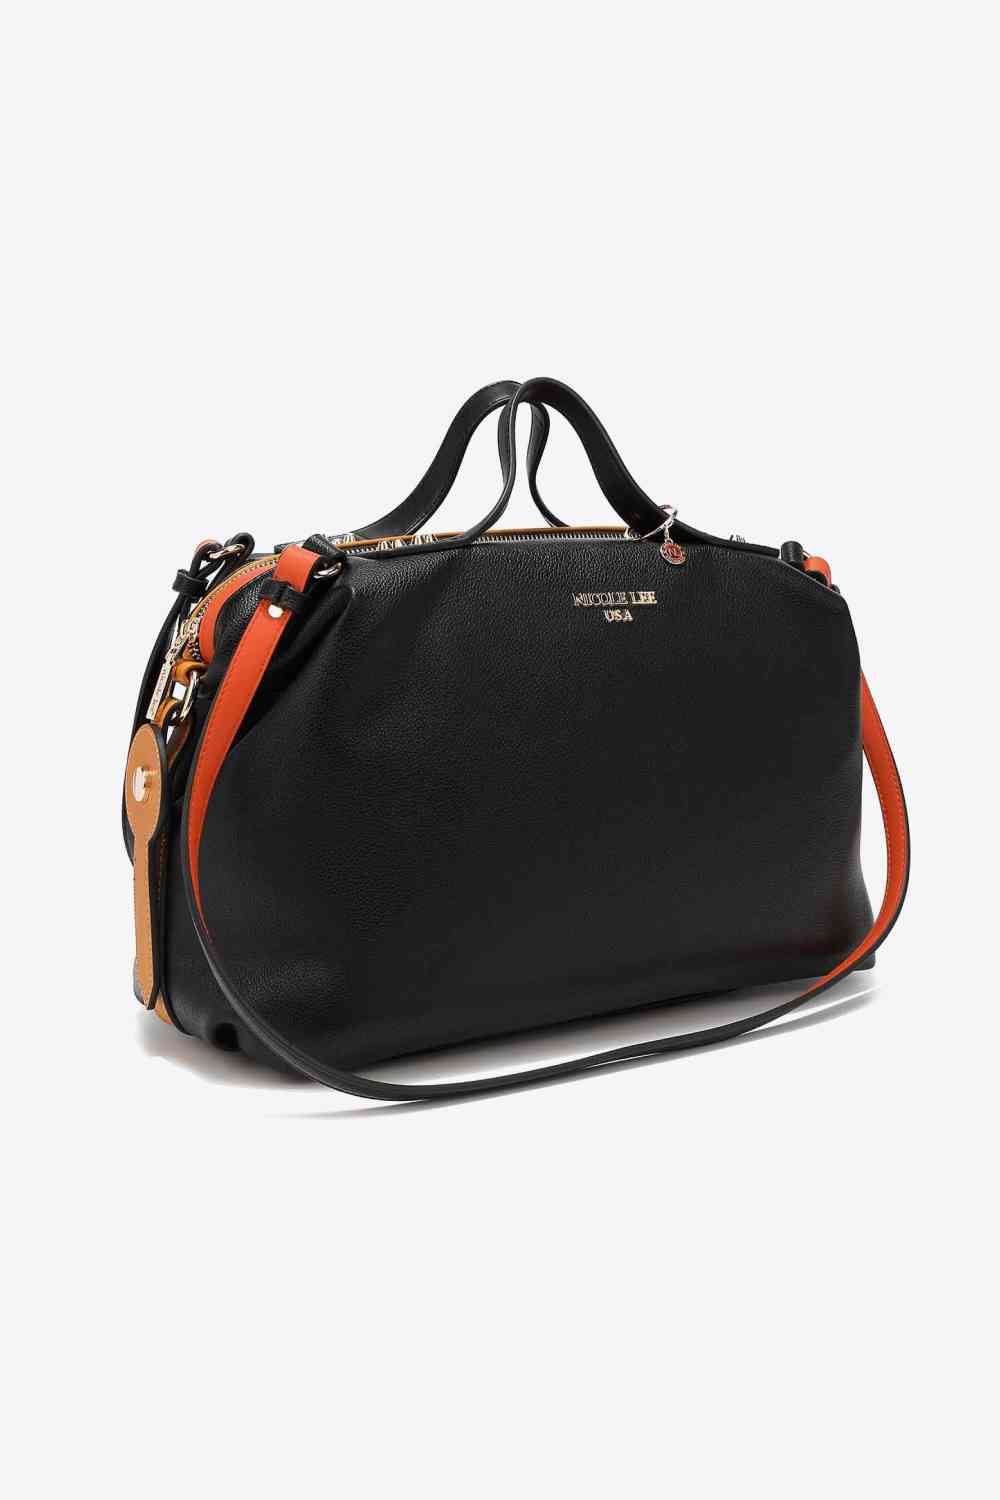 Nicole Lee USA Avery Multi Strap Boston Bag Black One Size